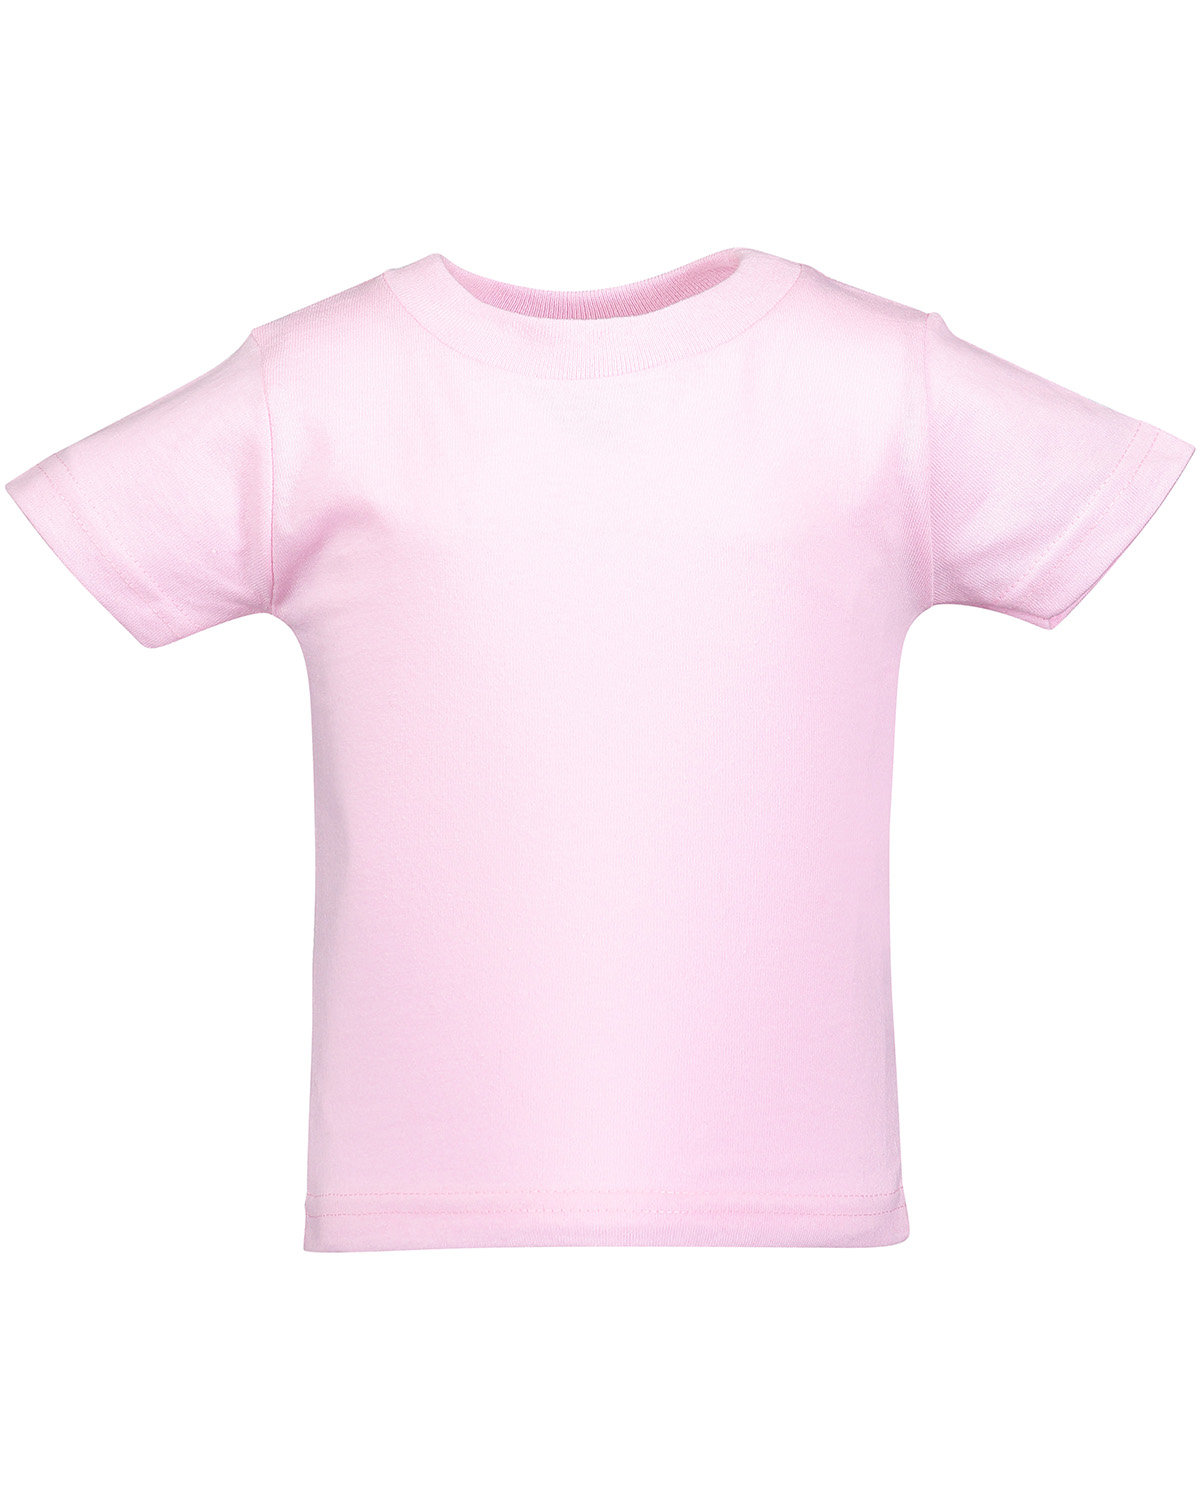 Rabbit Skins Infant Cotton Jersey T-Shirt pink 